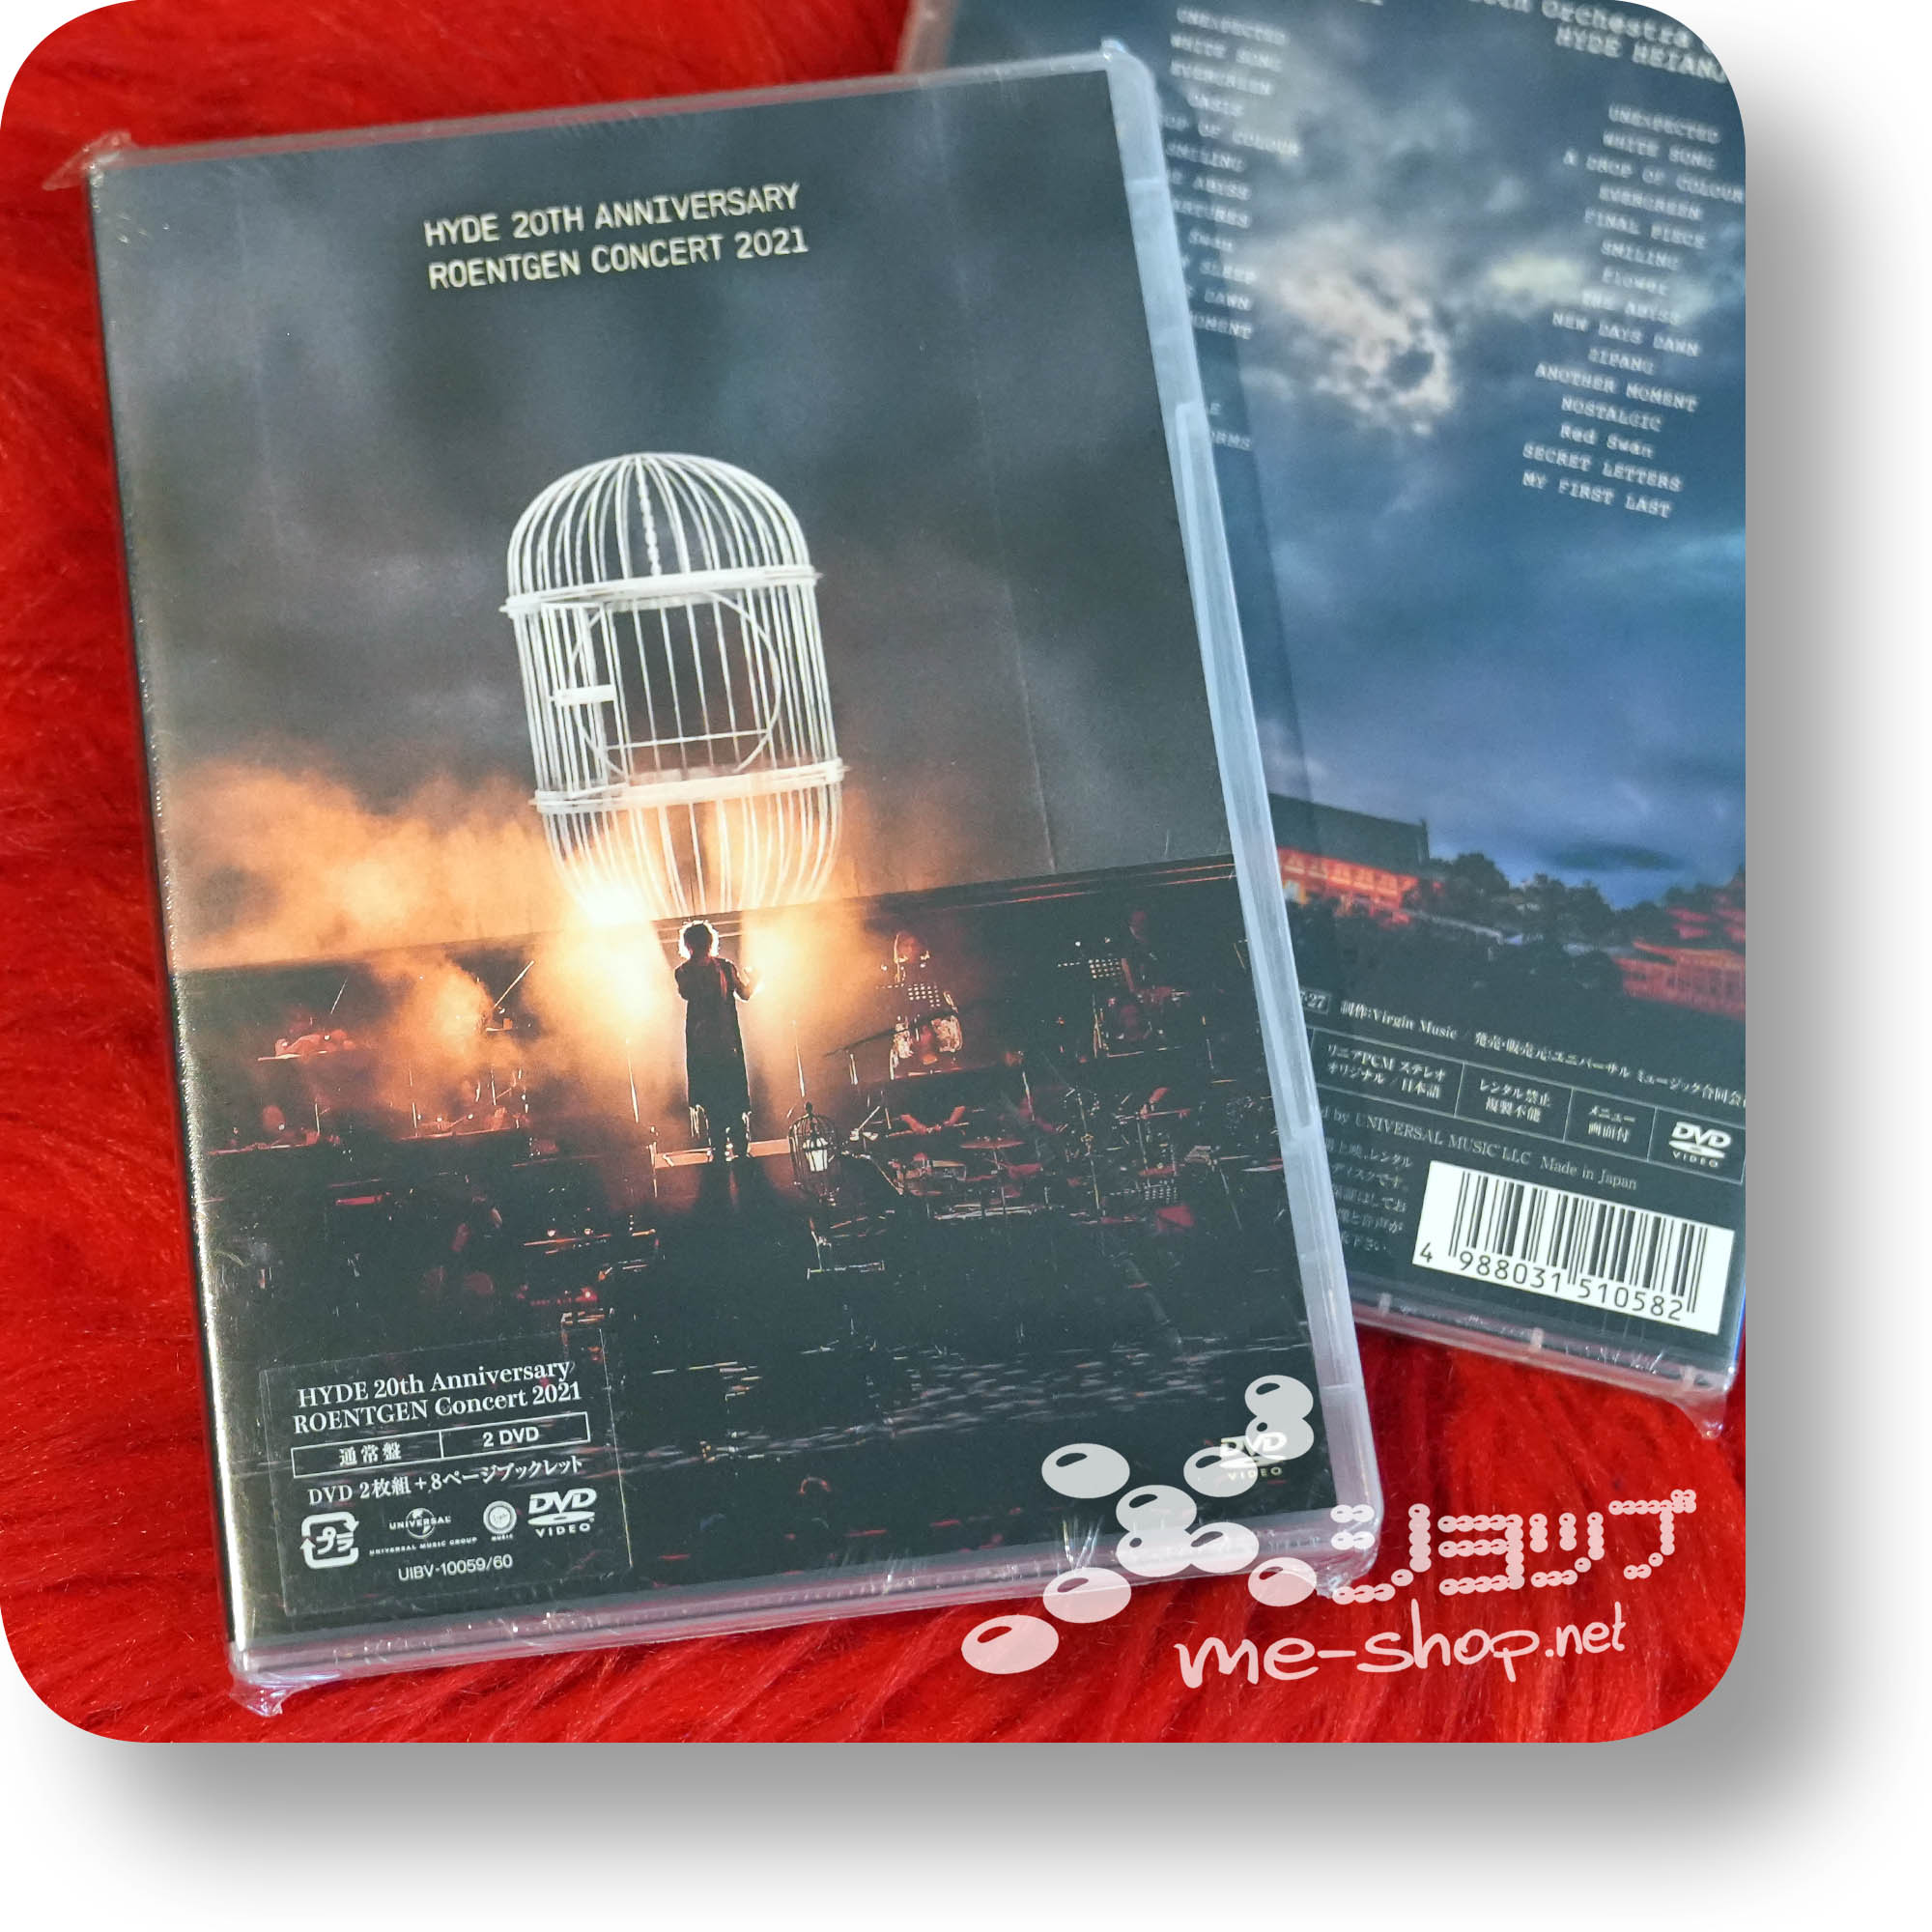 HYDE ROENTGEN STORIES DVD - ミュージック